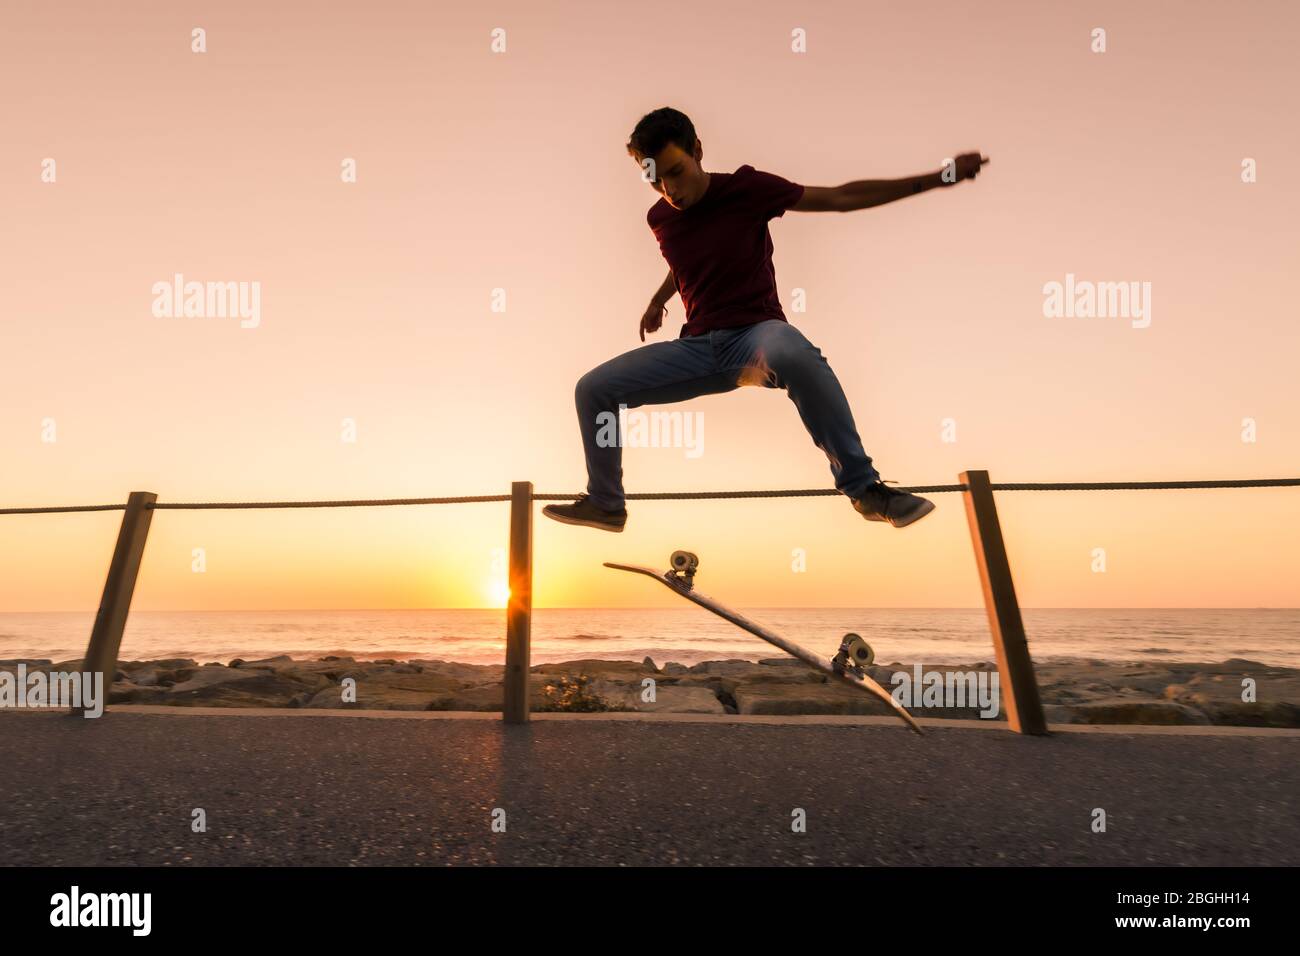 Skater make trick kickflip against the beautiful orange sunset. Stock Photo